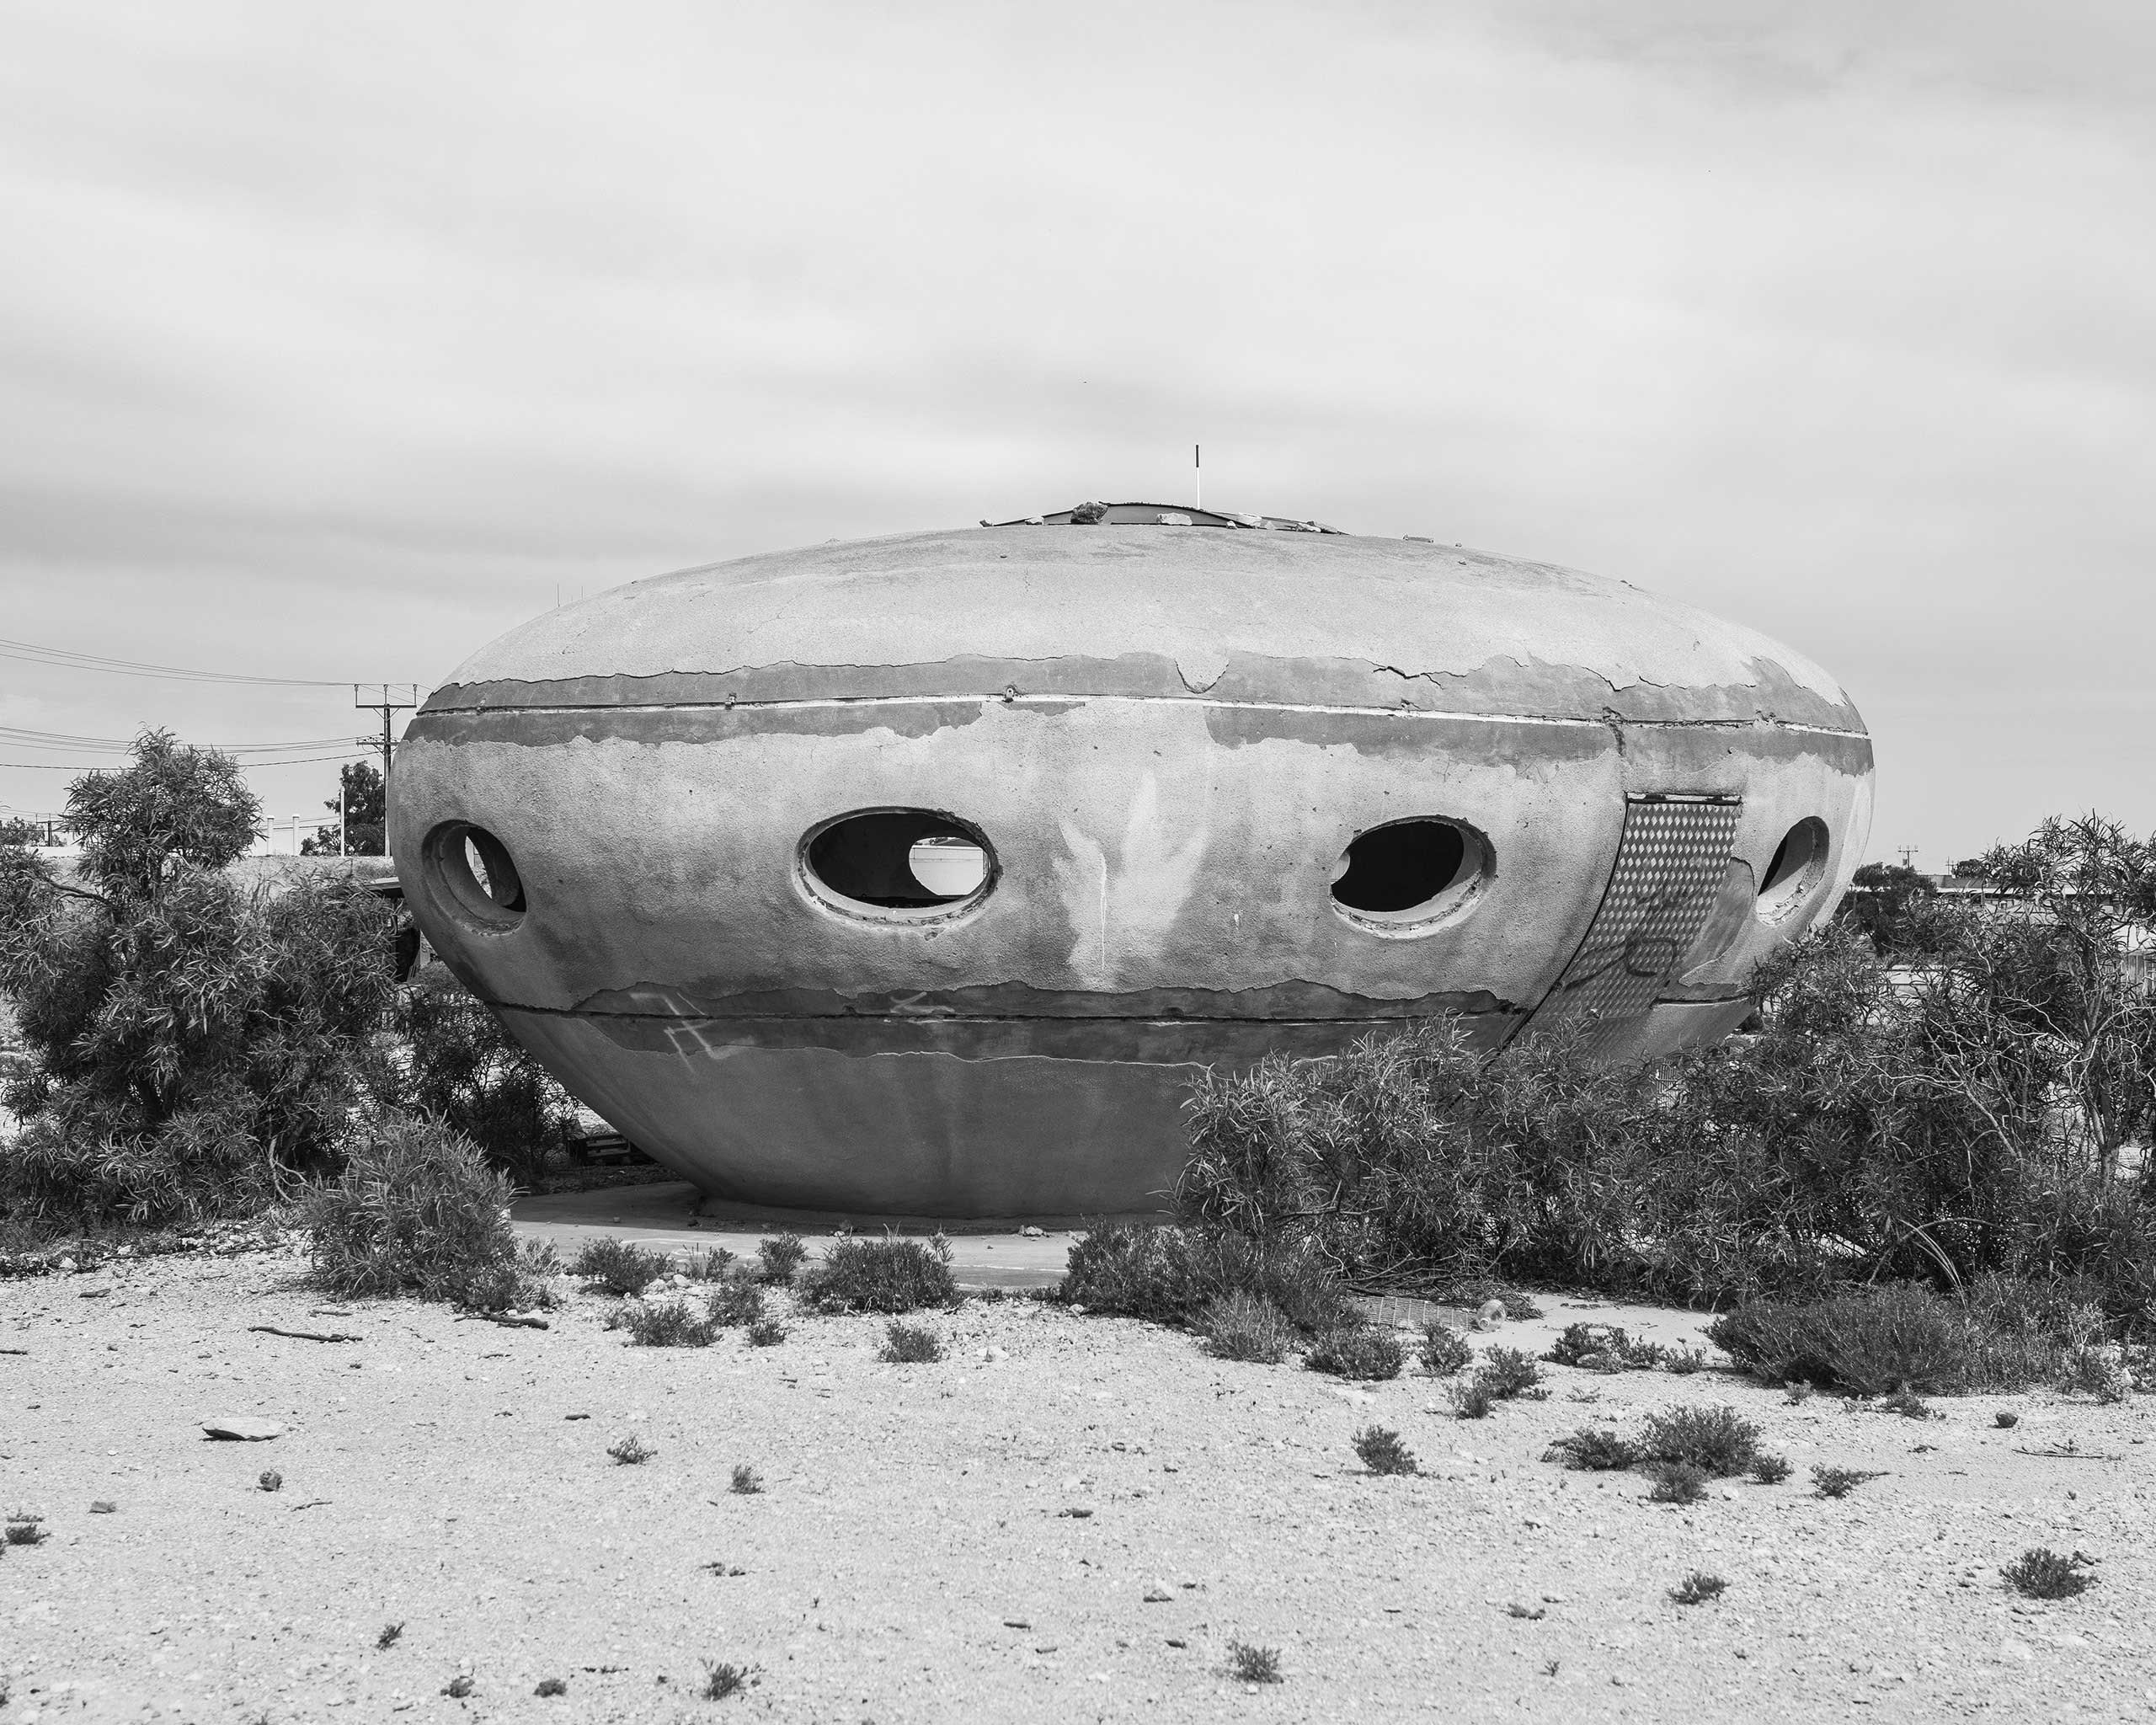 Flying Saucer, Coober Pedy, Australia, 2016.